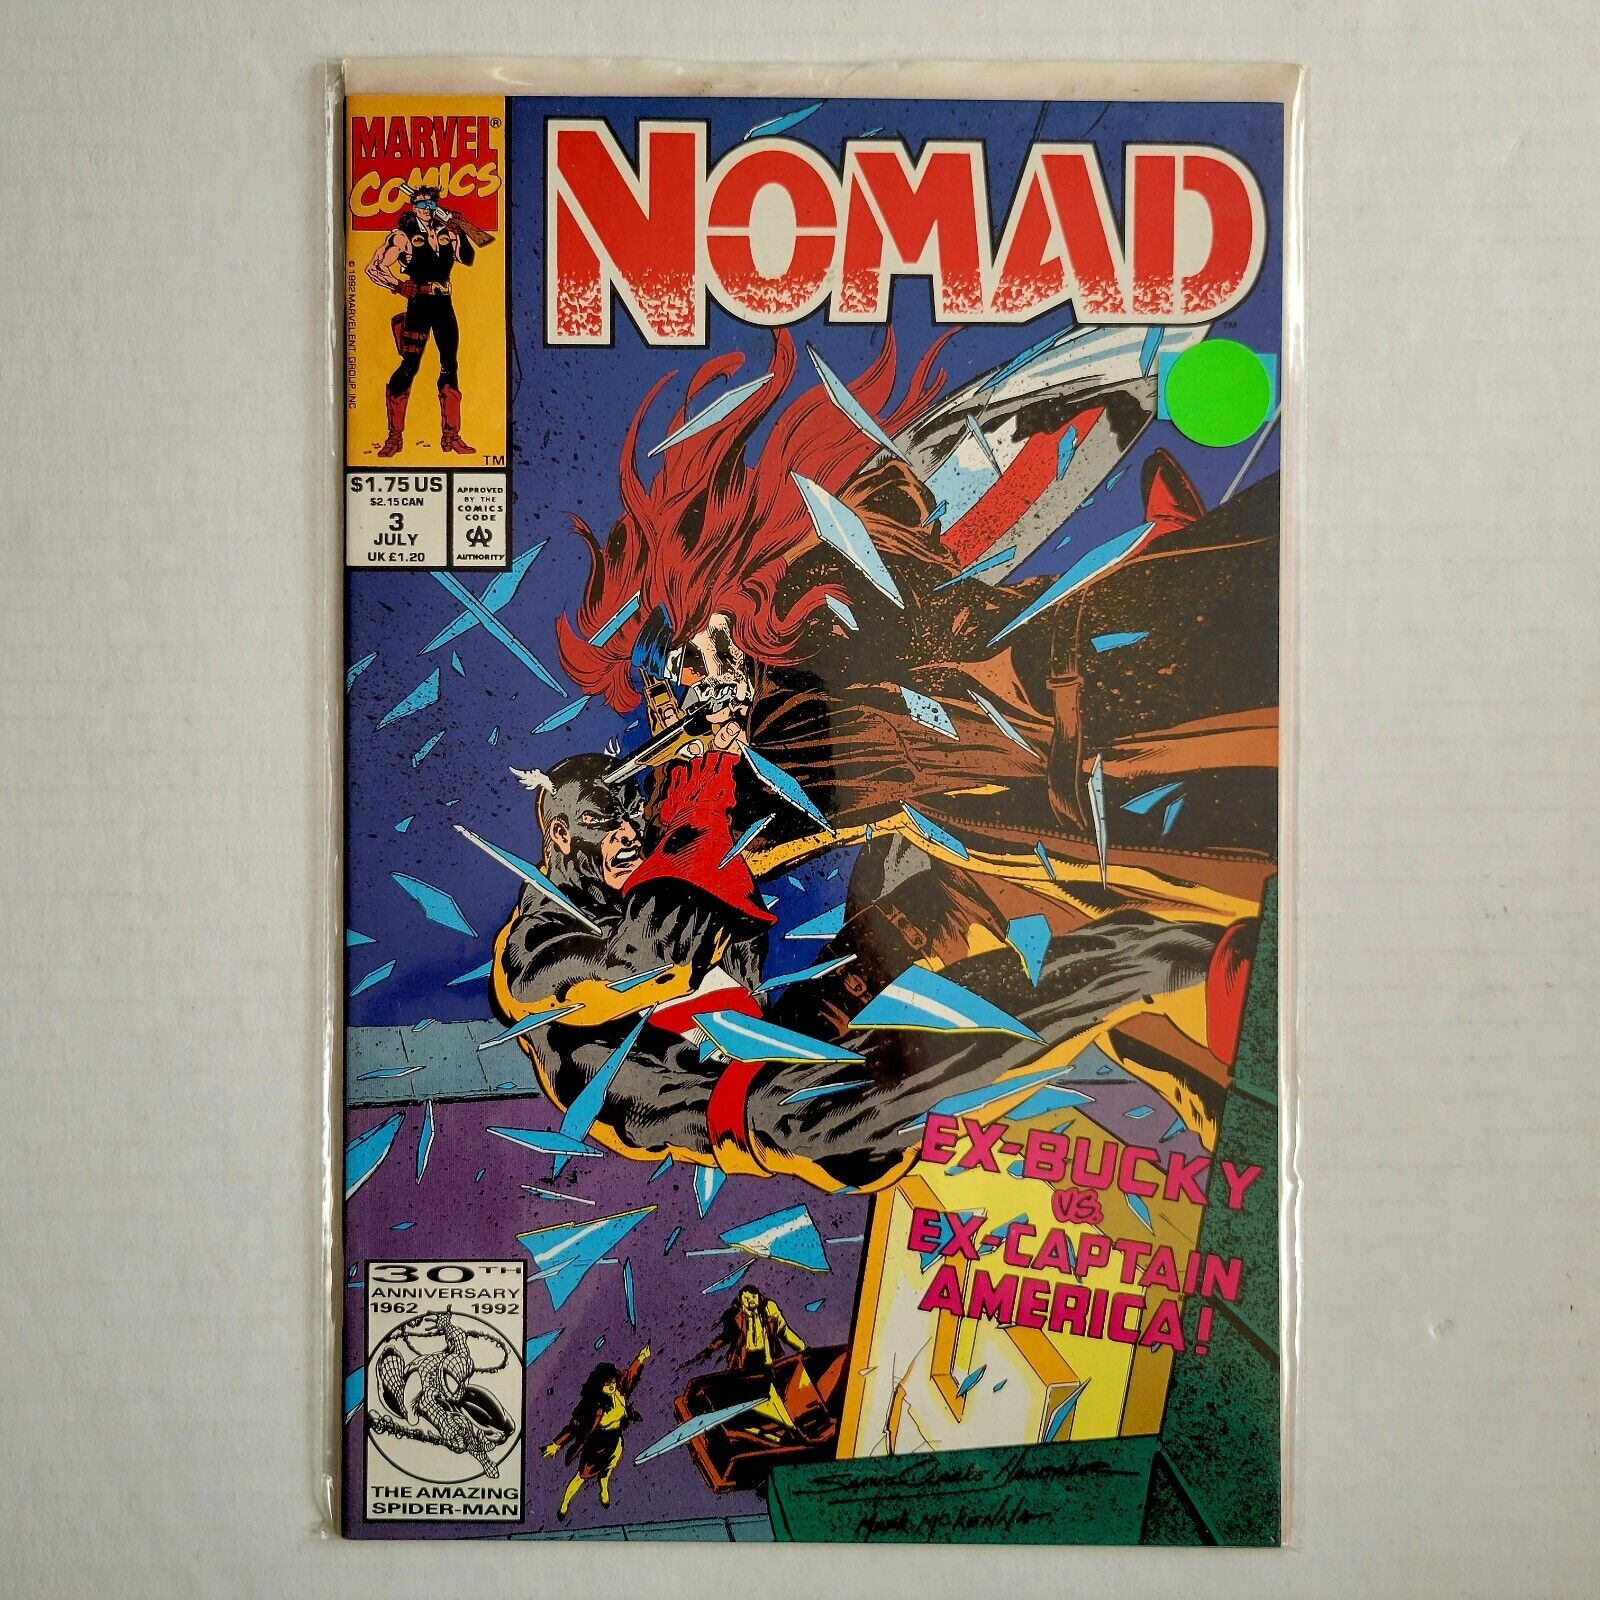 NOMAD #3 (Marvel 1992) Ex-Bucky vs Ex-Captain America, VF/NM unread